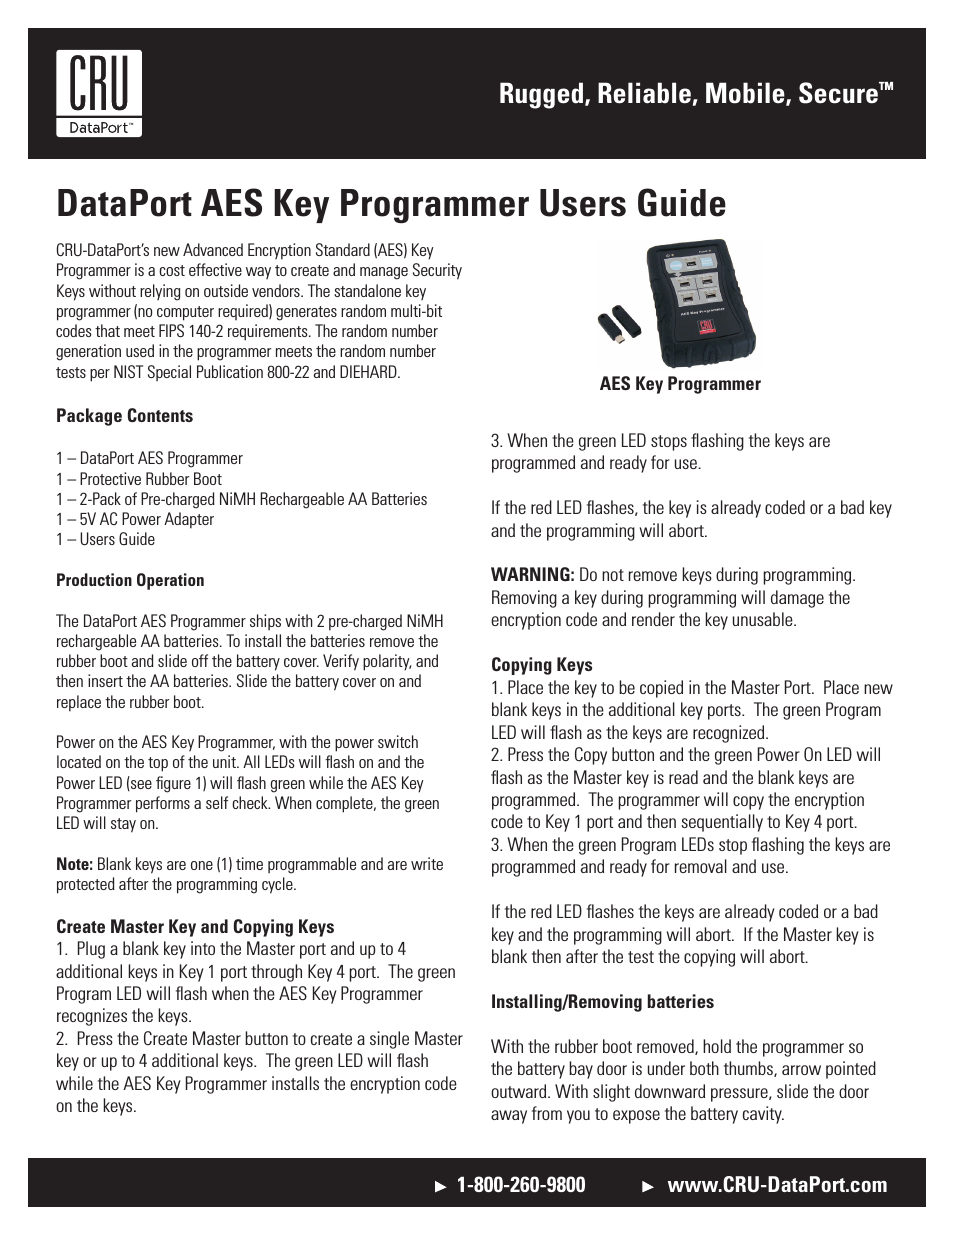 AES Key Programmer and Keys